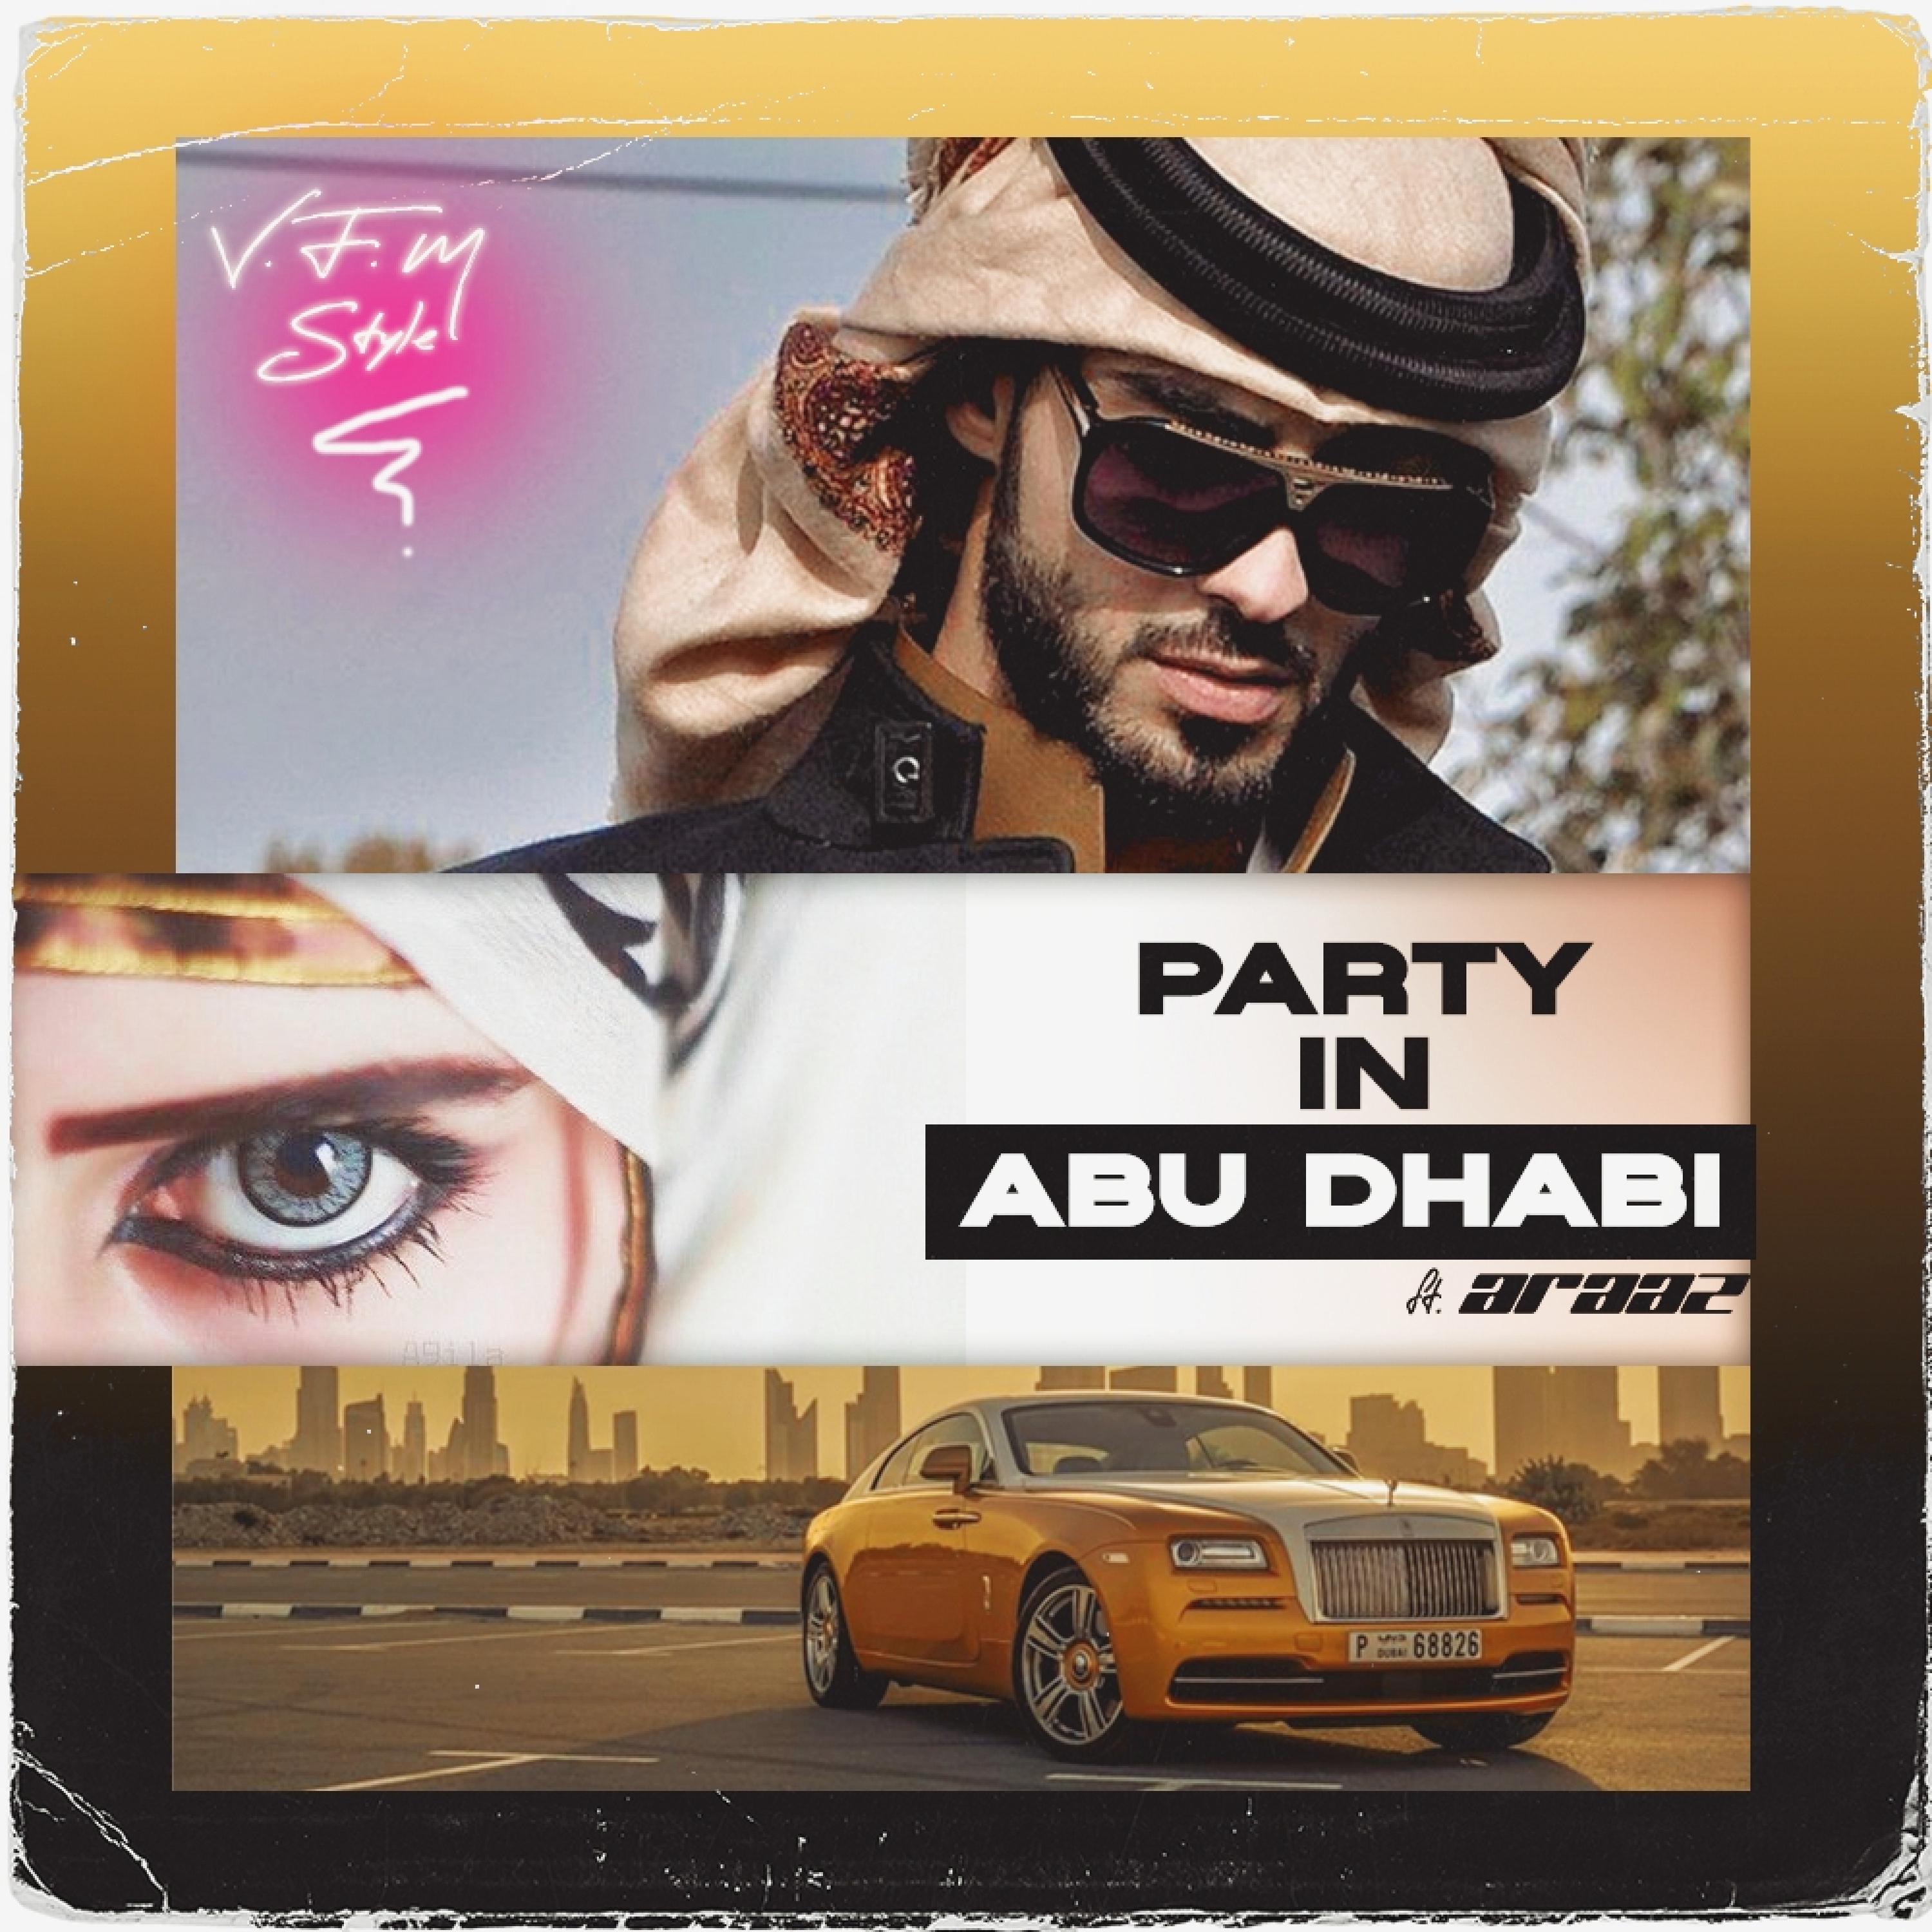 V.F.M.style - Party in Abu Dhabi (feat. ARAAZ)